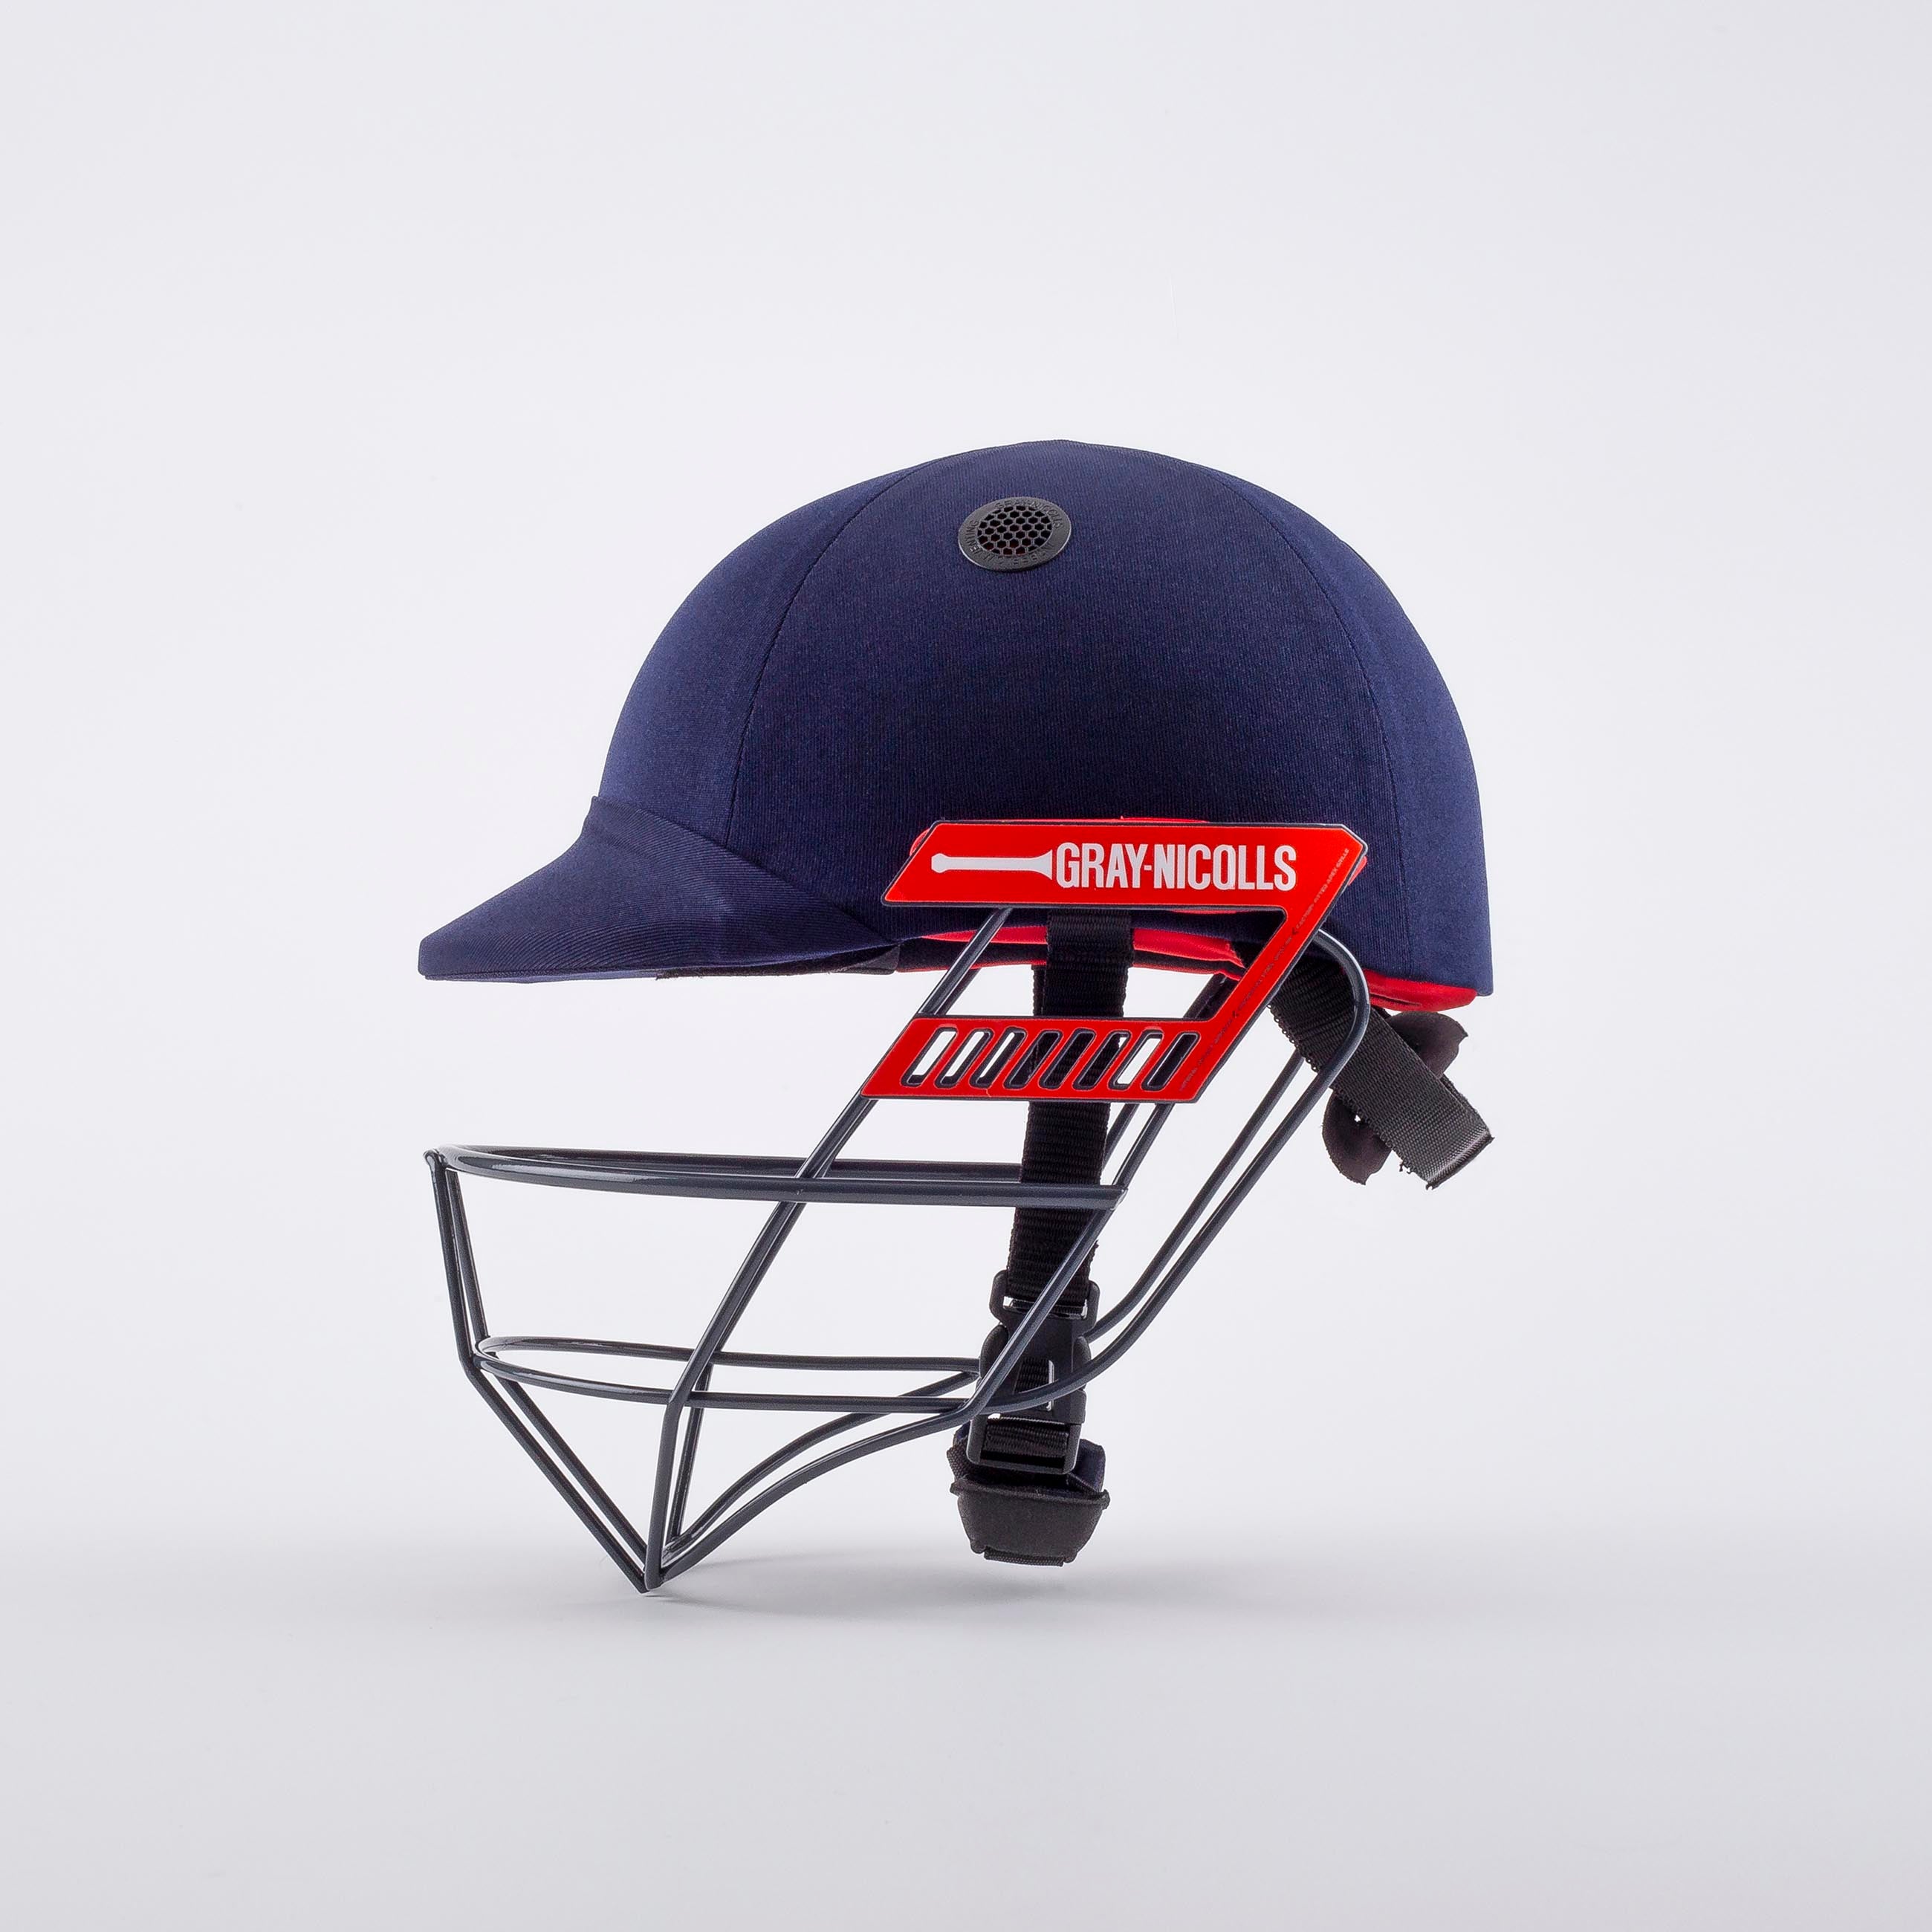 Ultimate 360 Cricket Helmet Senior